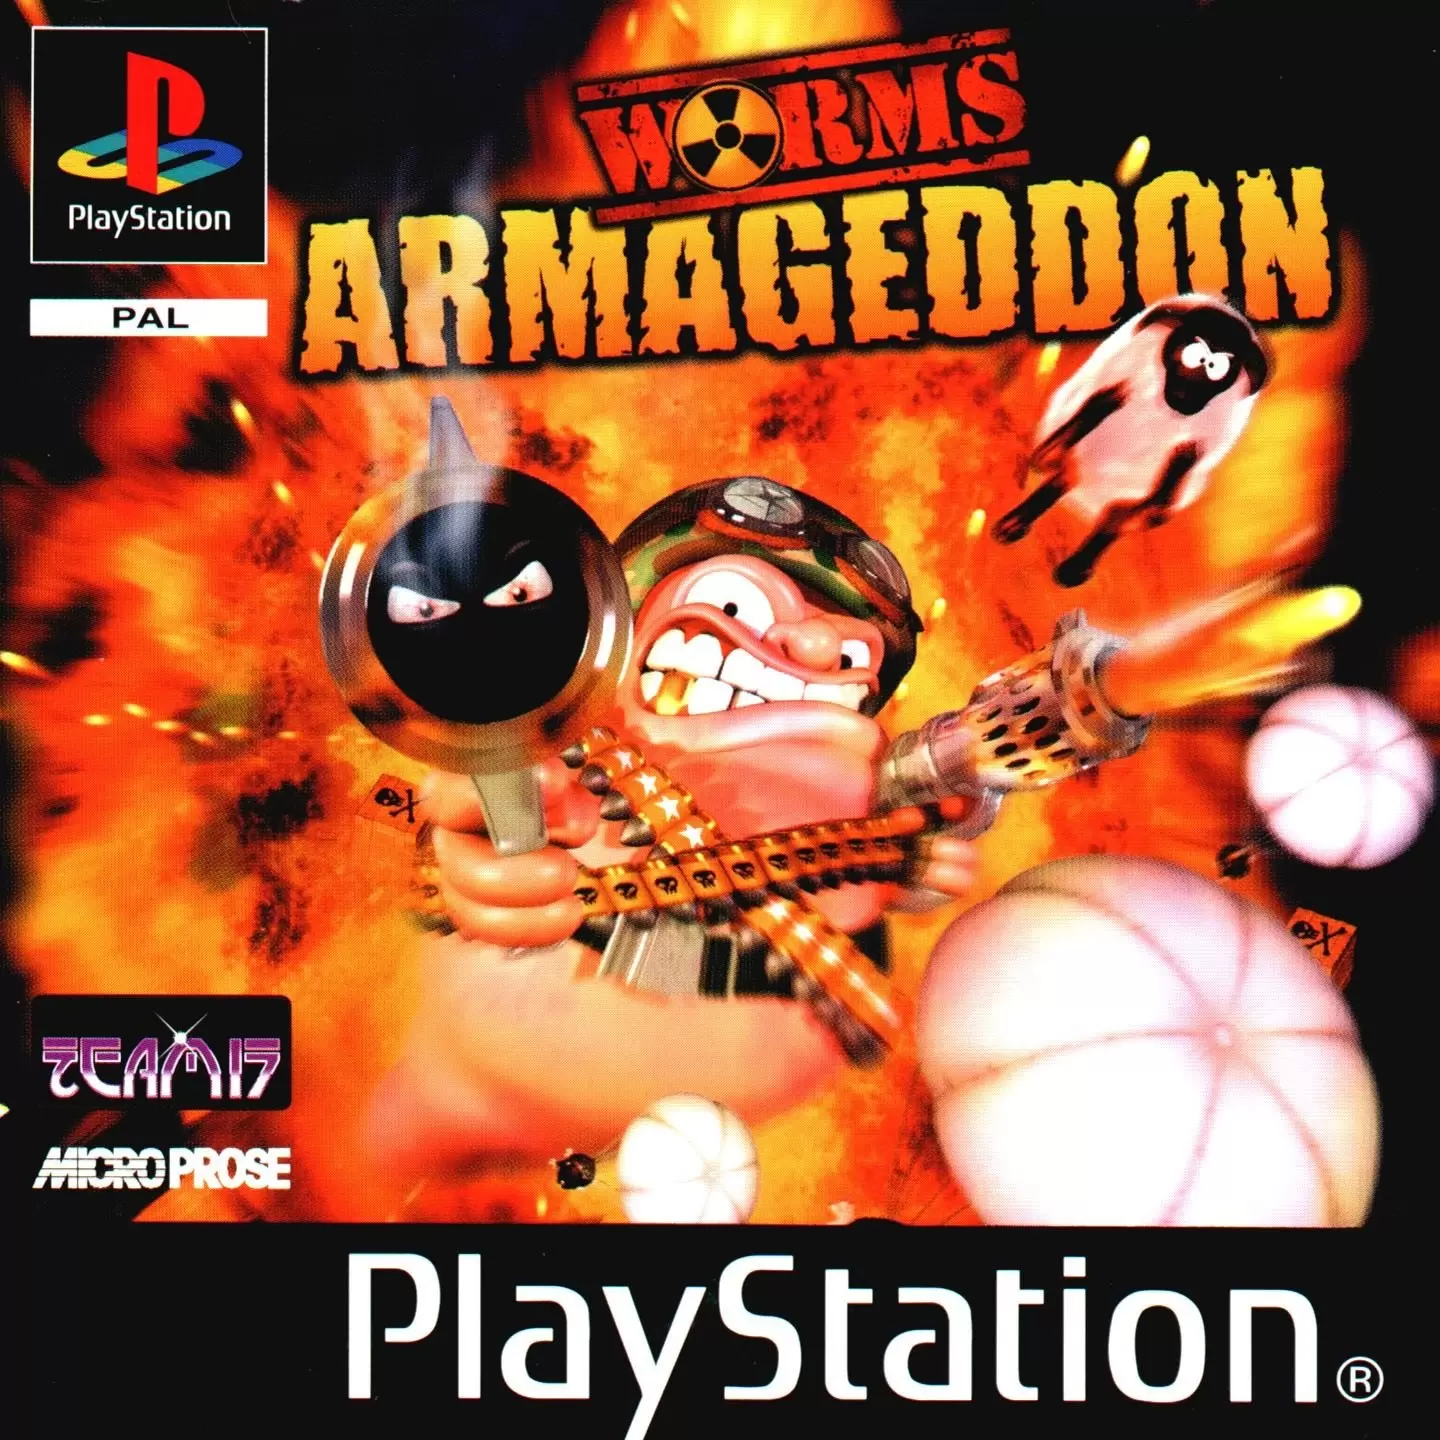 Playstation games - Worms Armageddon